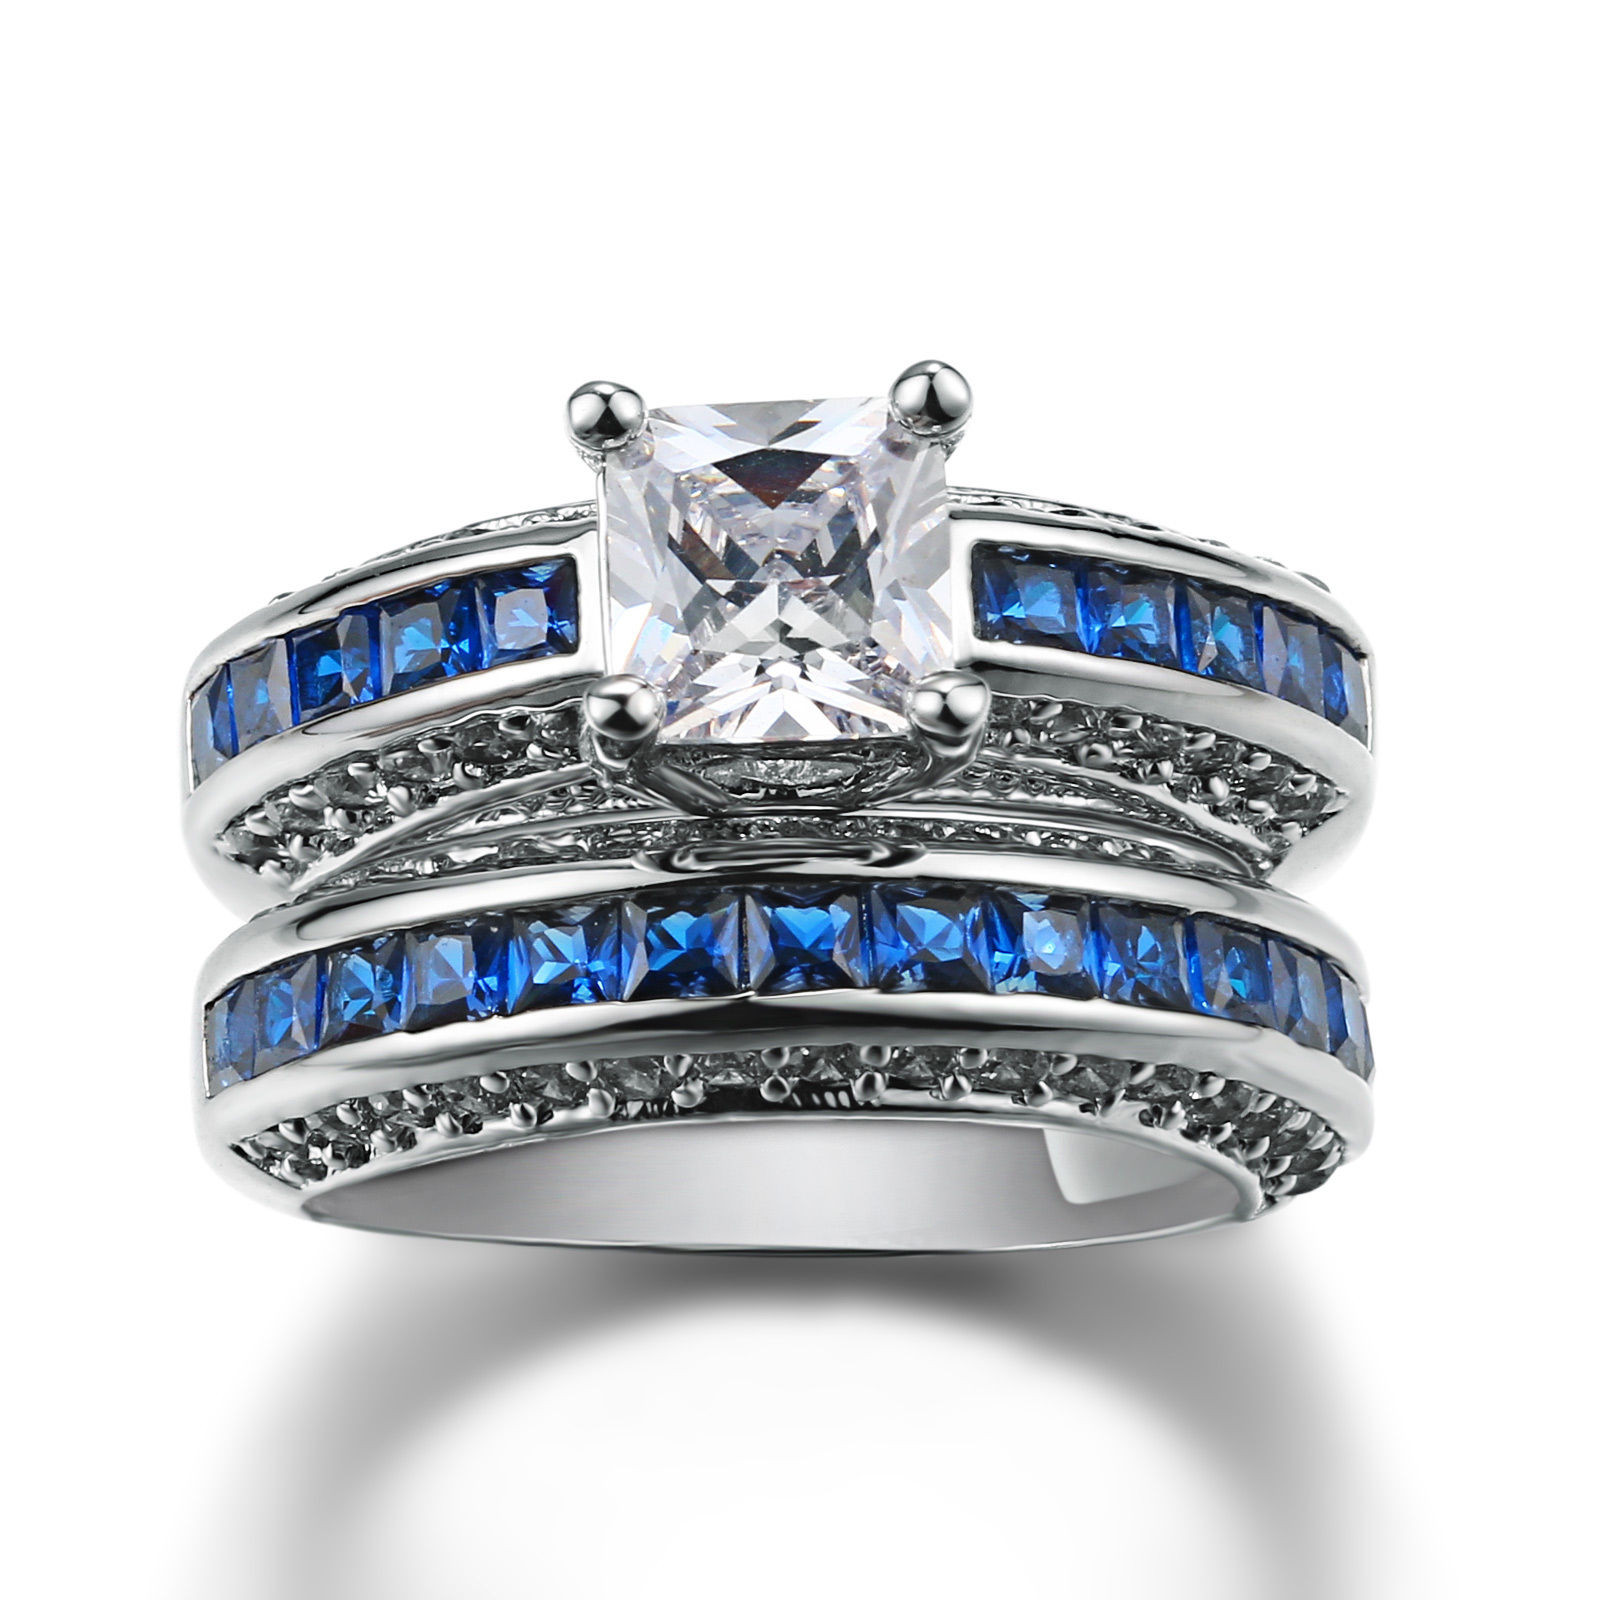 White Sapphire Wedding Ring Sets
 Princess Cut 6mm 925 Silver Sapphire White Gold GF Women